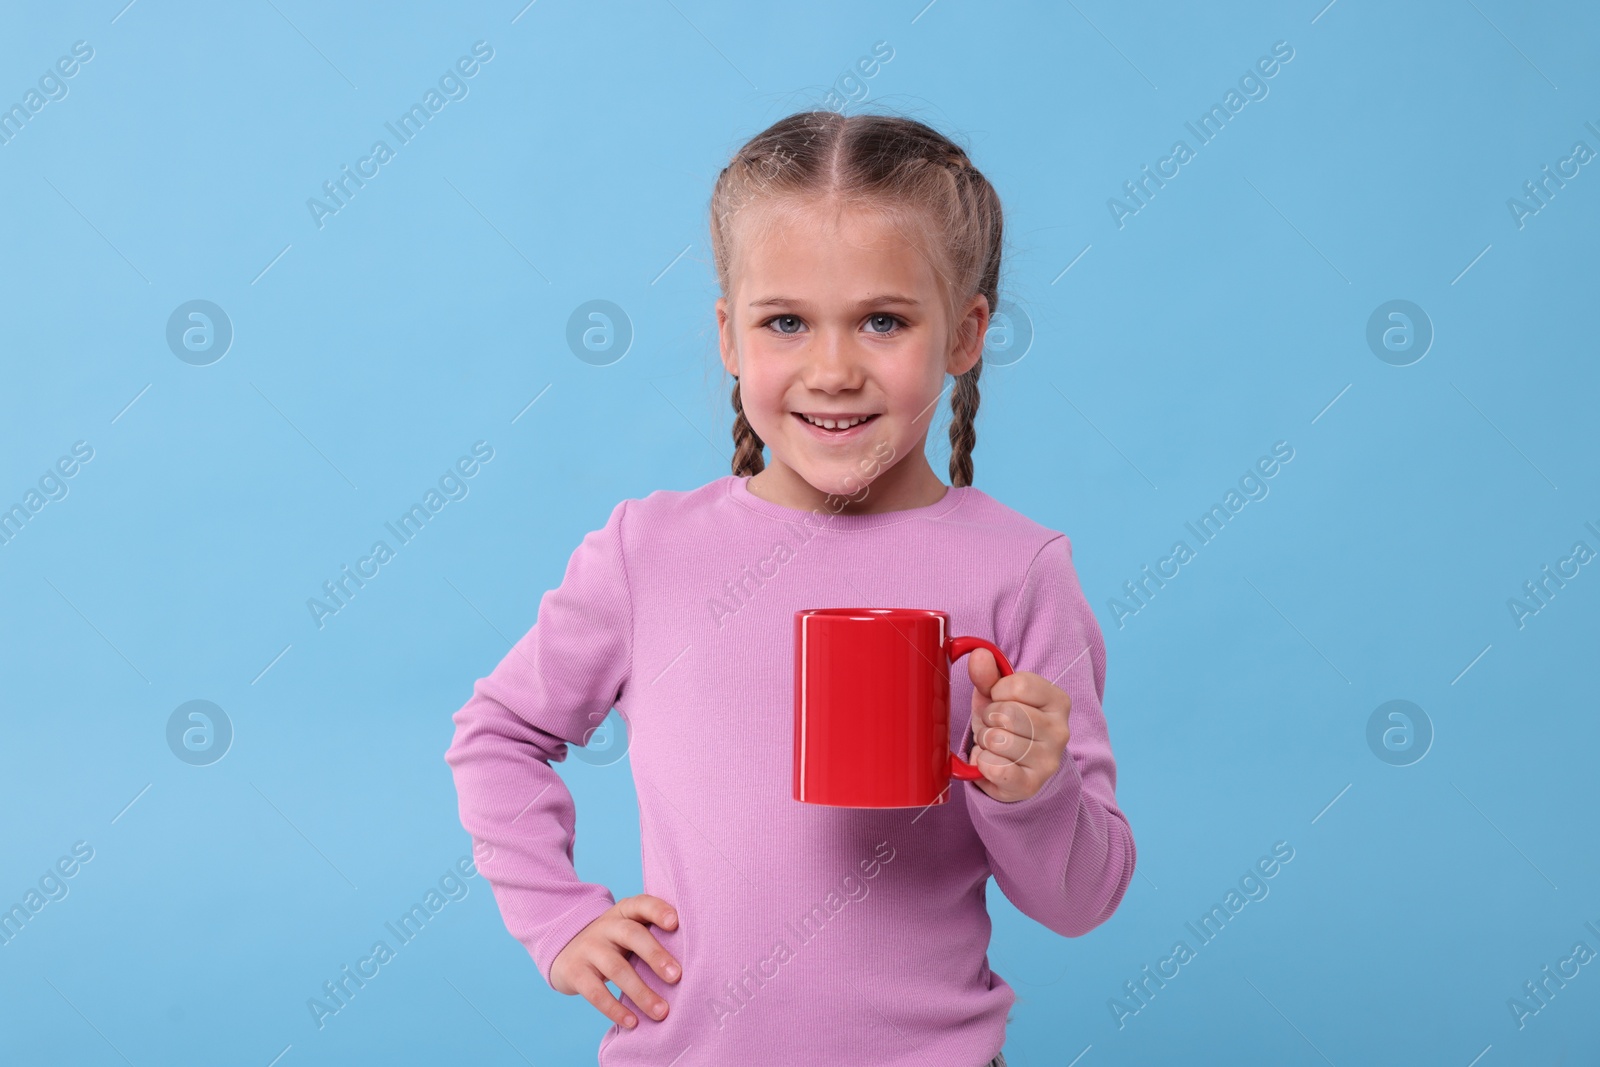 Photo of Happy girl with red ceramic mug on light blue background